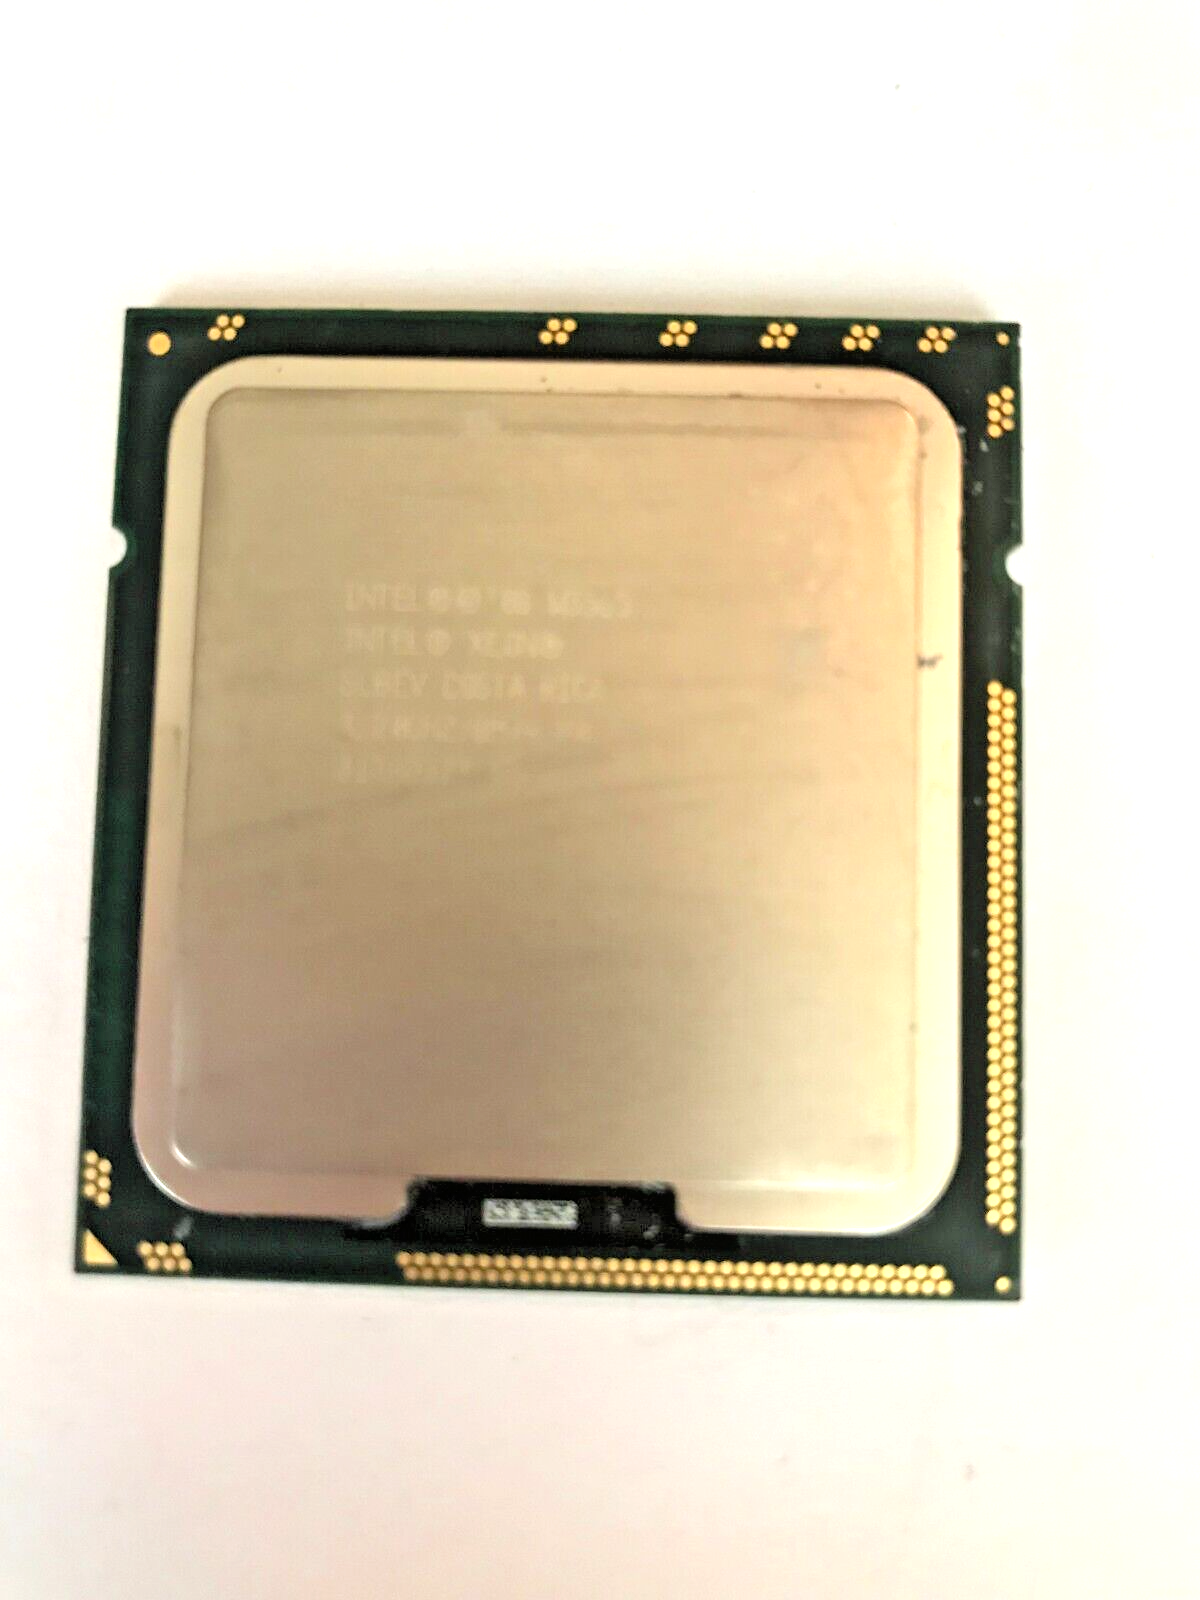 Primary image for Intel Xeon W3565 3.2GHz Quad-Core Server  Processor